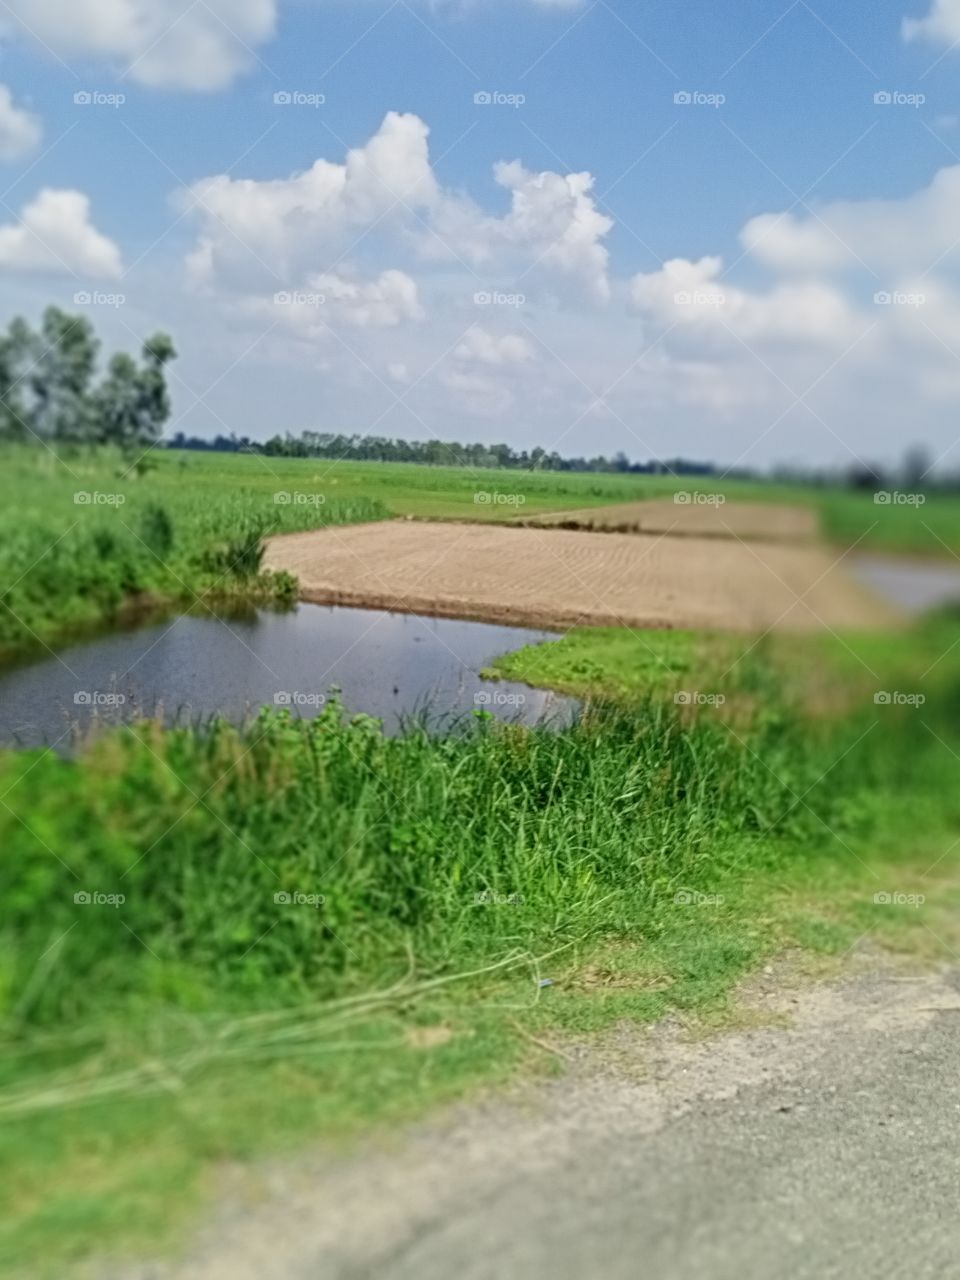 water in the field